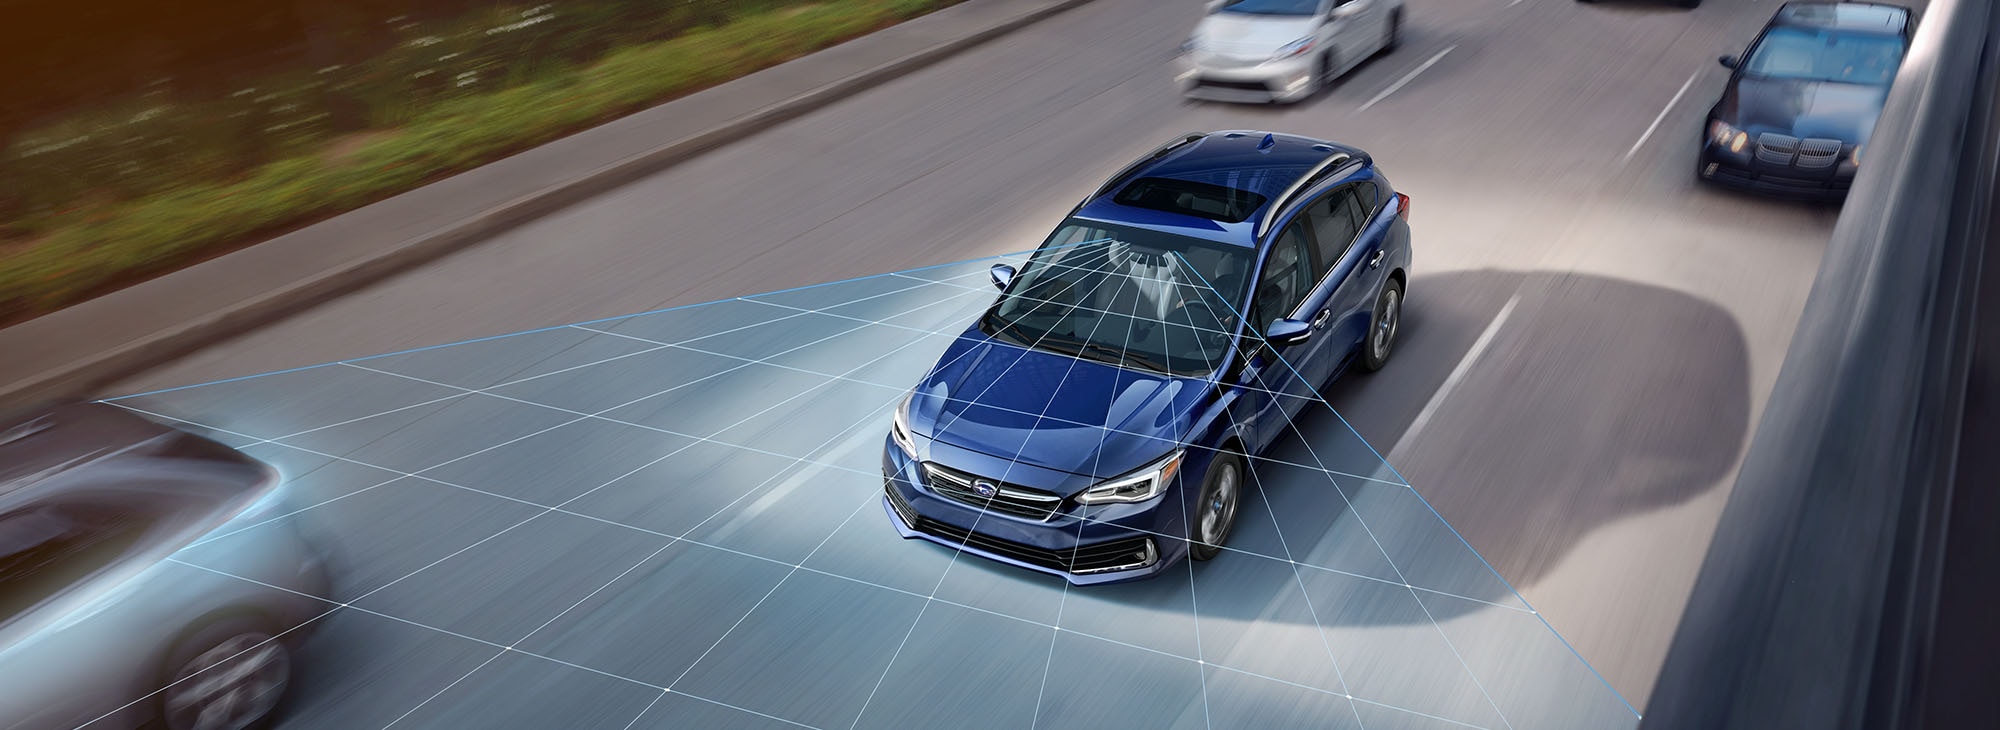  A photo illustration showing the EyeSight Driver Assist Technology on the 2023 Impreza hatchback.